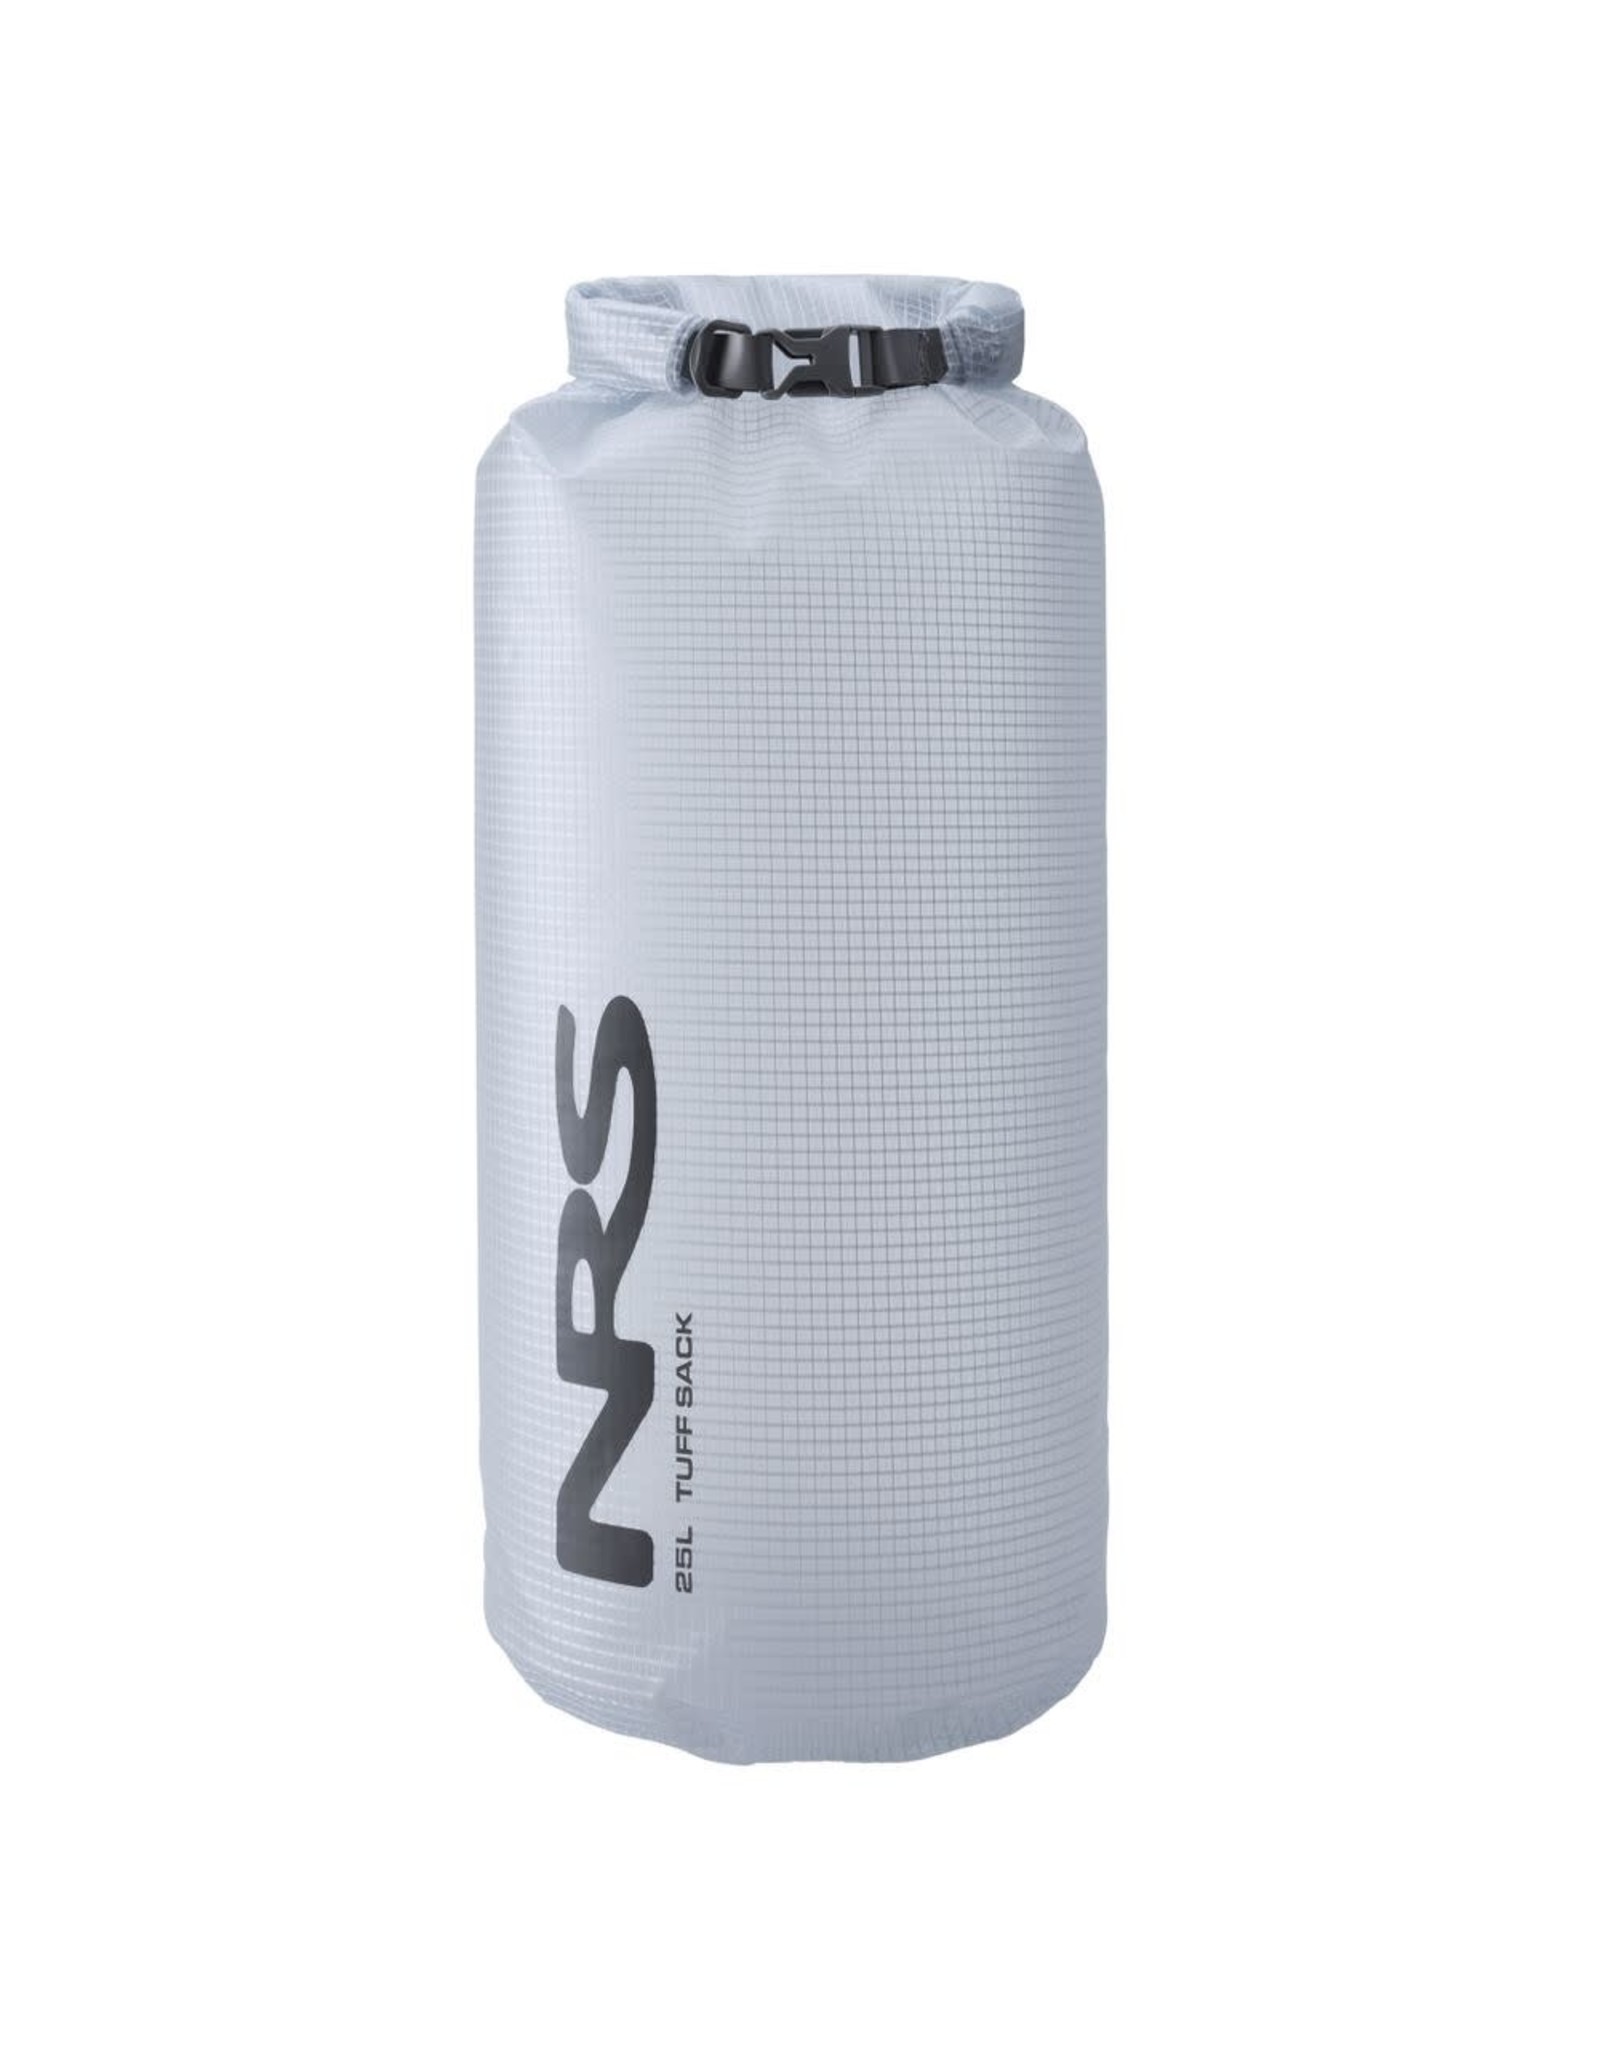 NRS NRS Dry Bag Tuff Sack Clear 25L